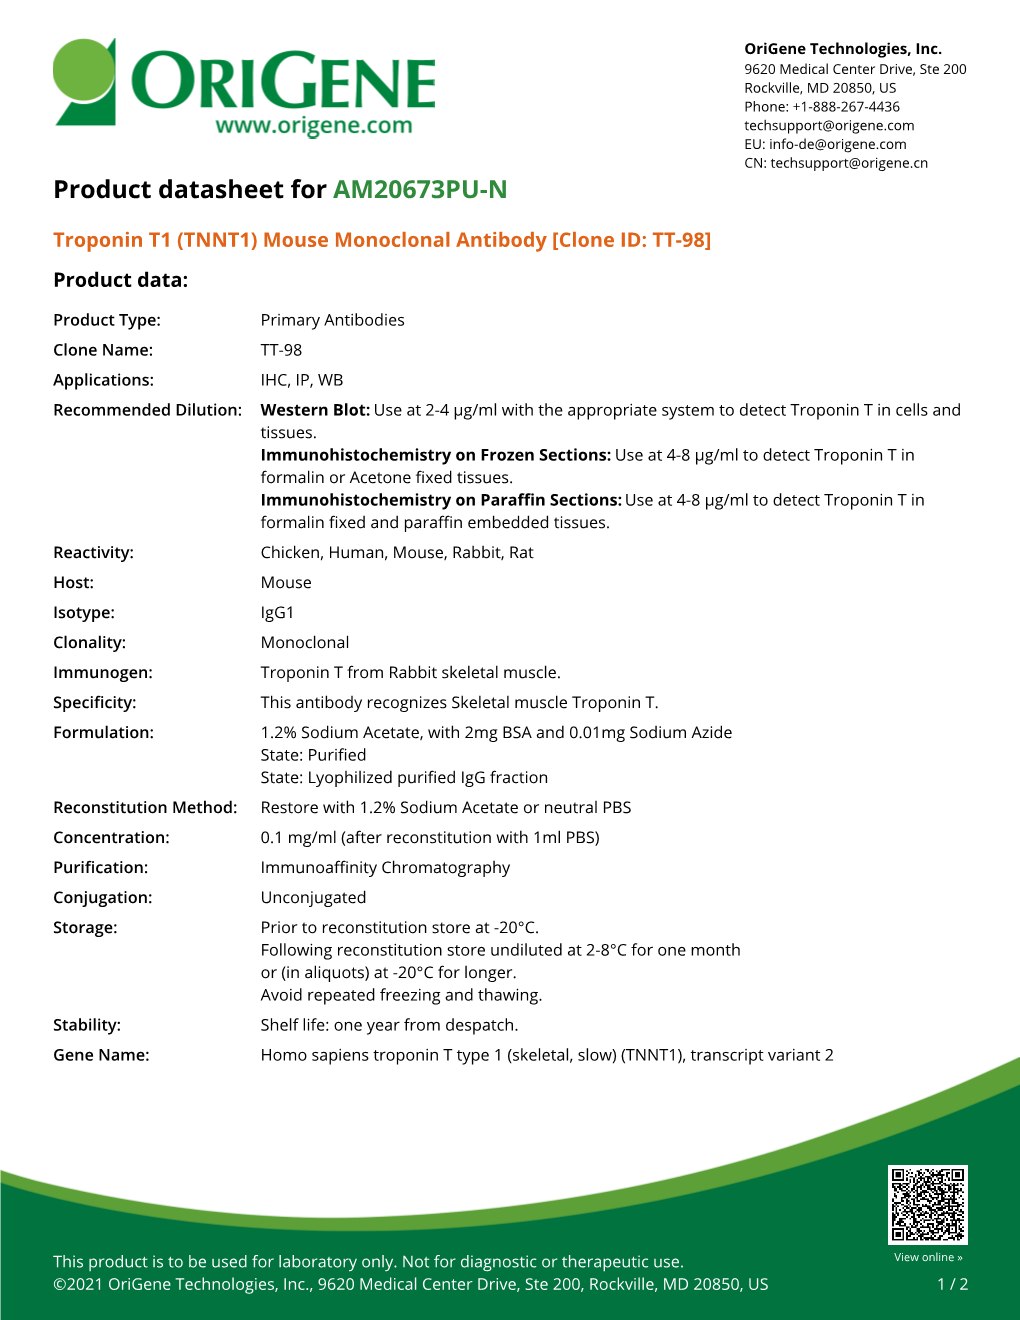 Troponin T1 (TNNT1) Mouse Monoclonal Antibody [Clone ID: TT-98] Product Data